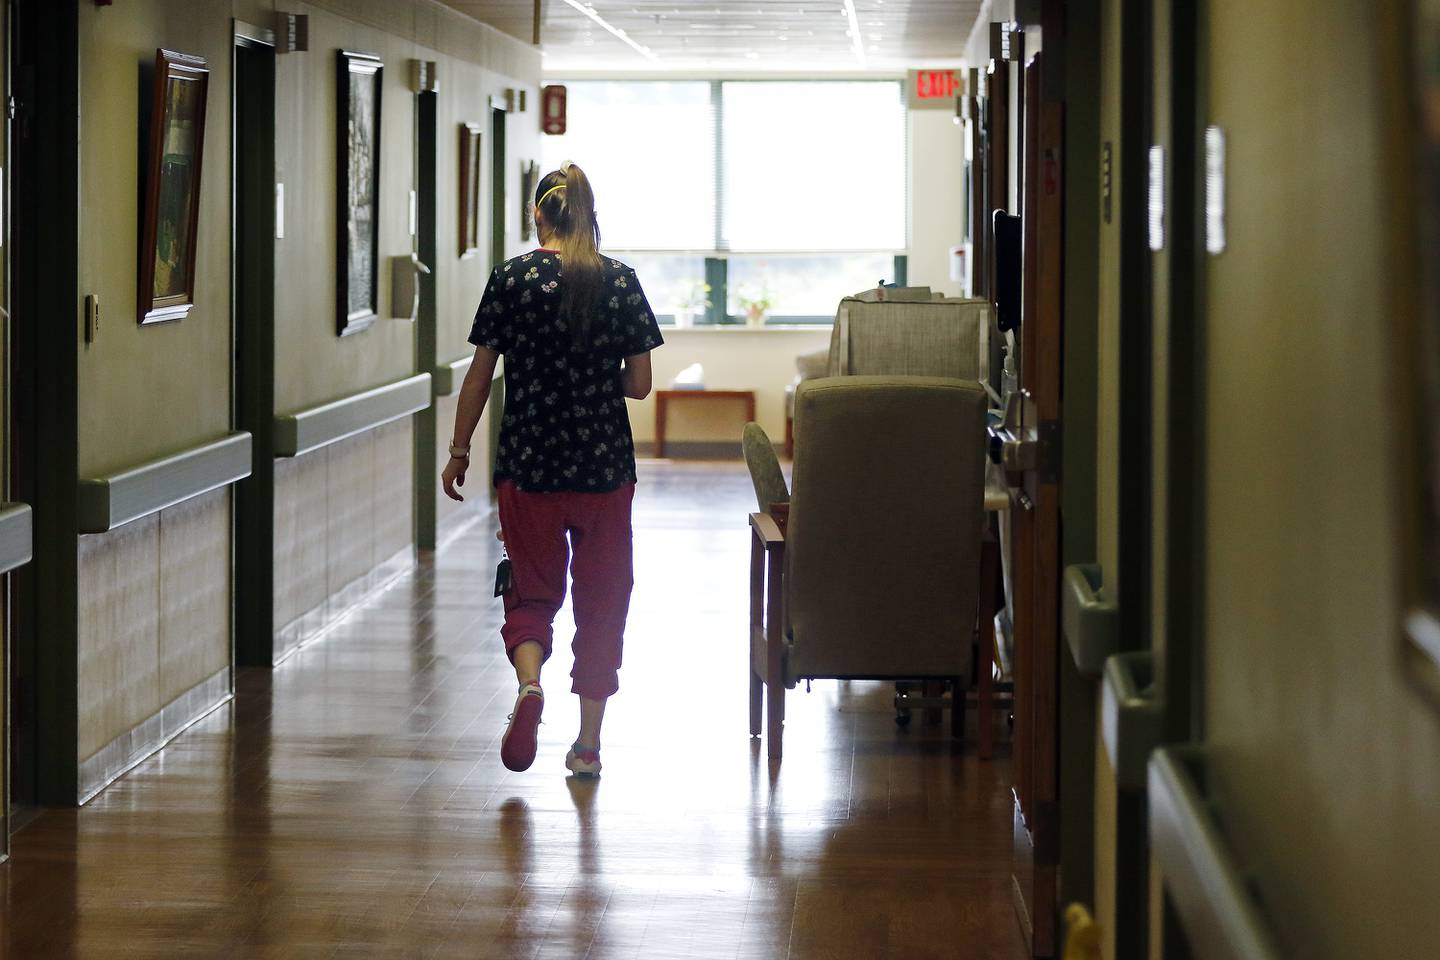 Rachel Reddick, CNA, heads down a hallway at Valley Hi Nursing Home on Tuesday, Aug. 17, 2021 in Woodstock.